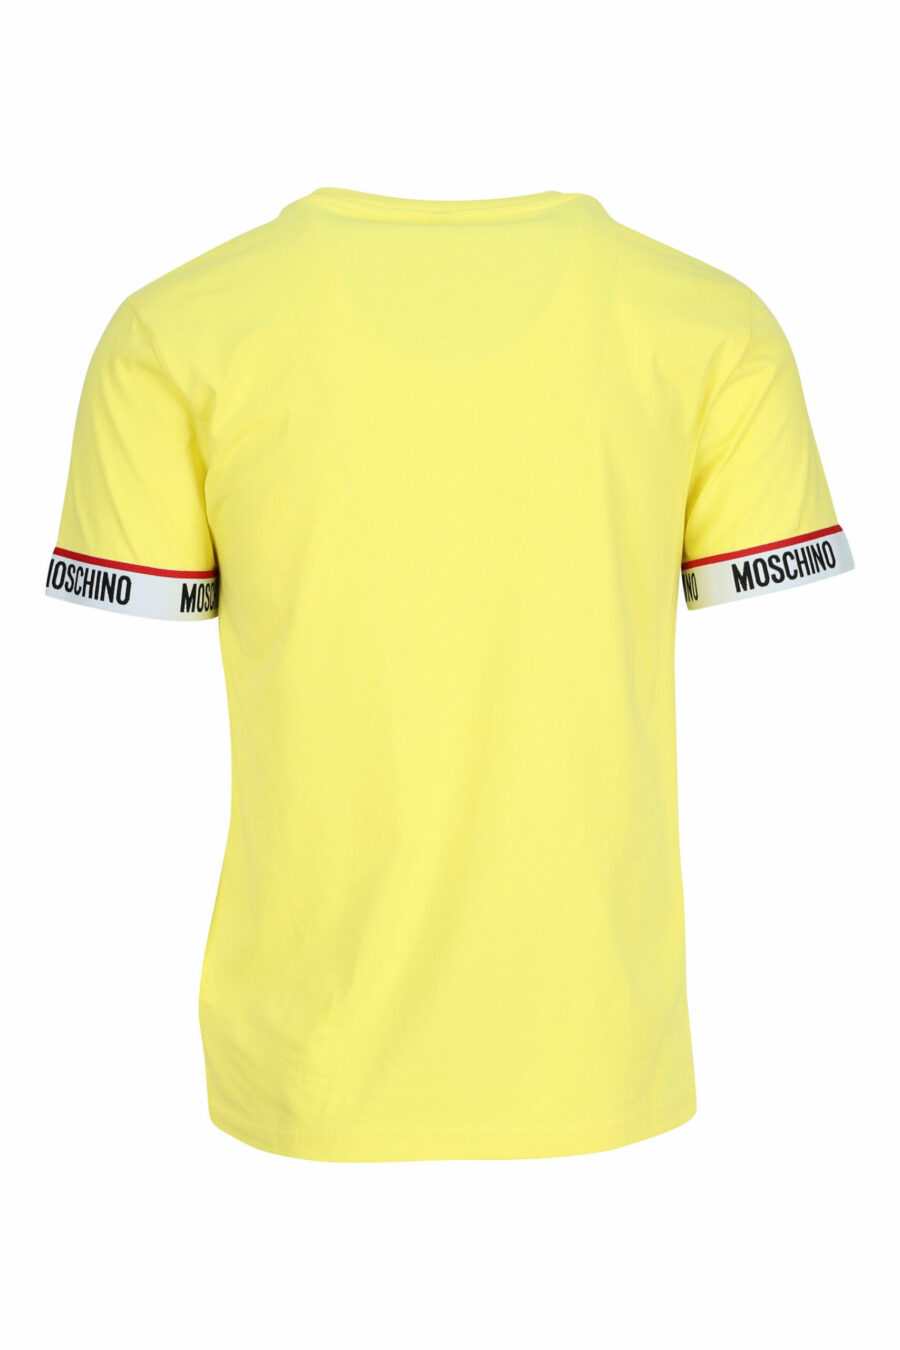 Camiseta amarilla con logo blanco en mangas - 667113604671 1 scaled